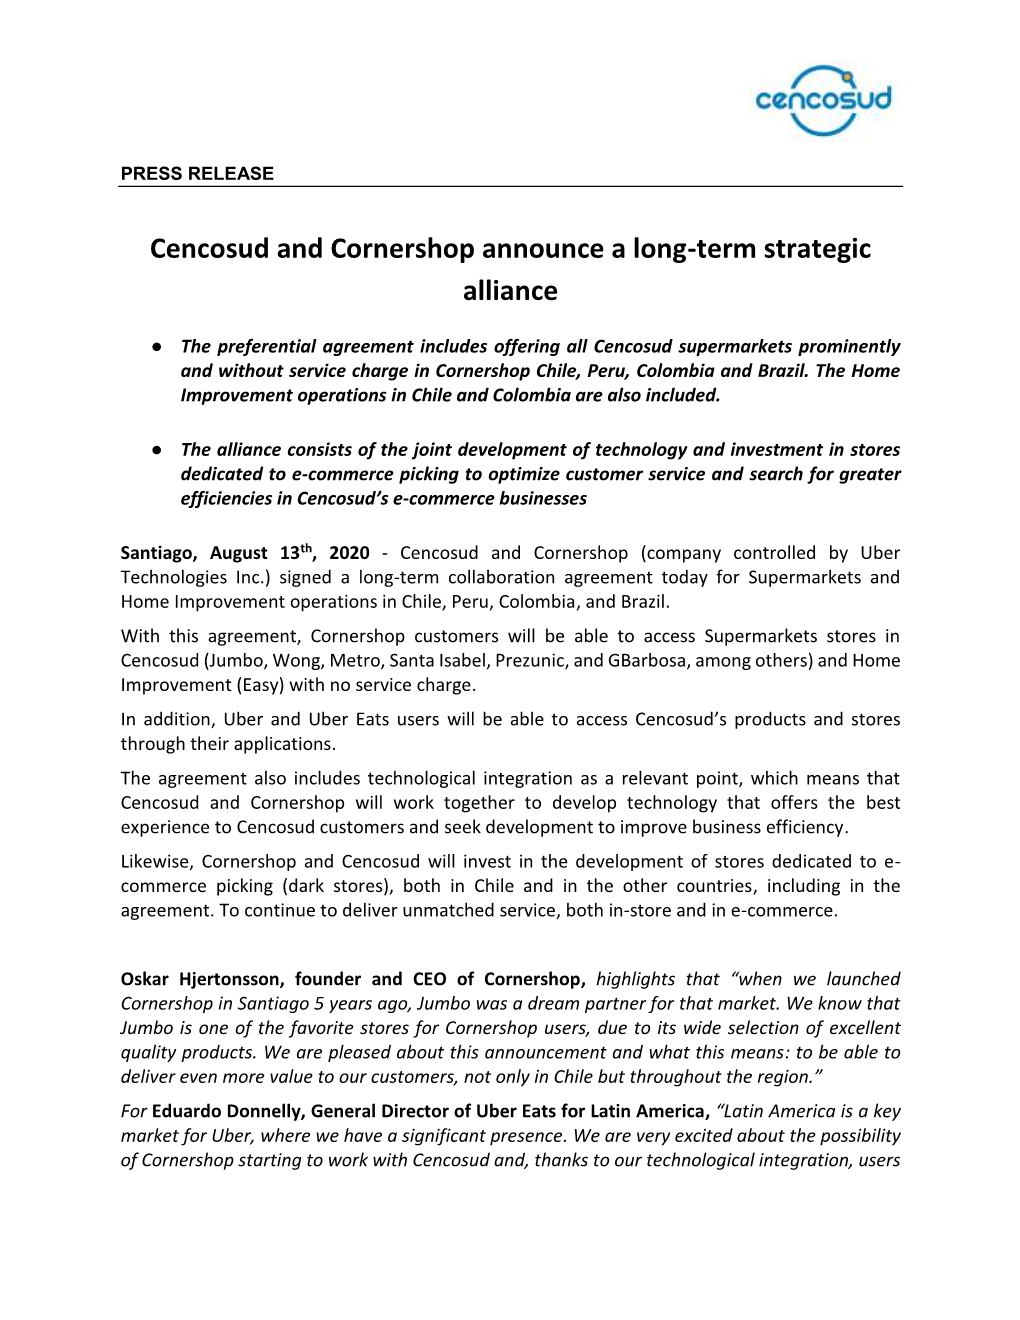 Cencosud and Cornershop Announce a Long-Term Strategic Alliance